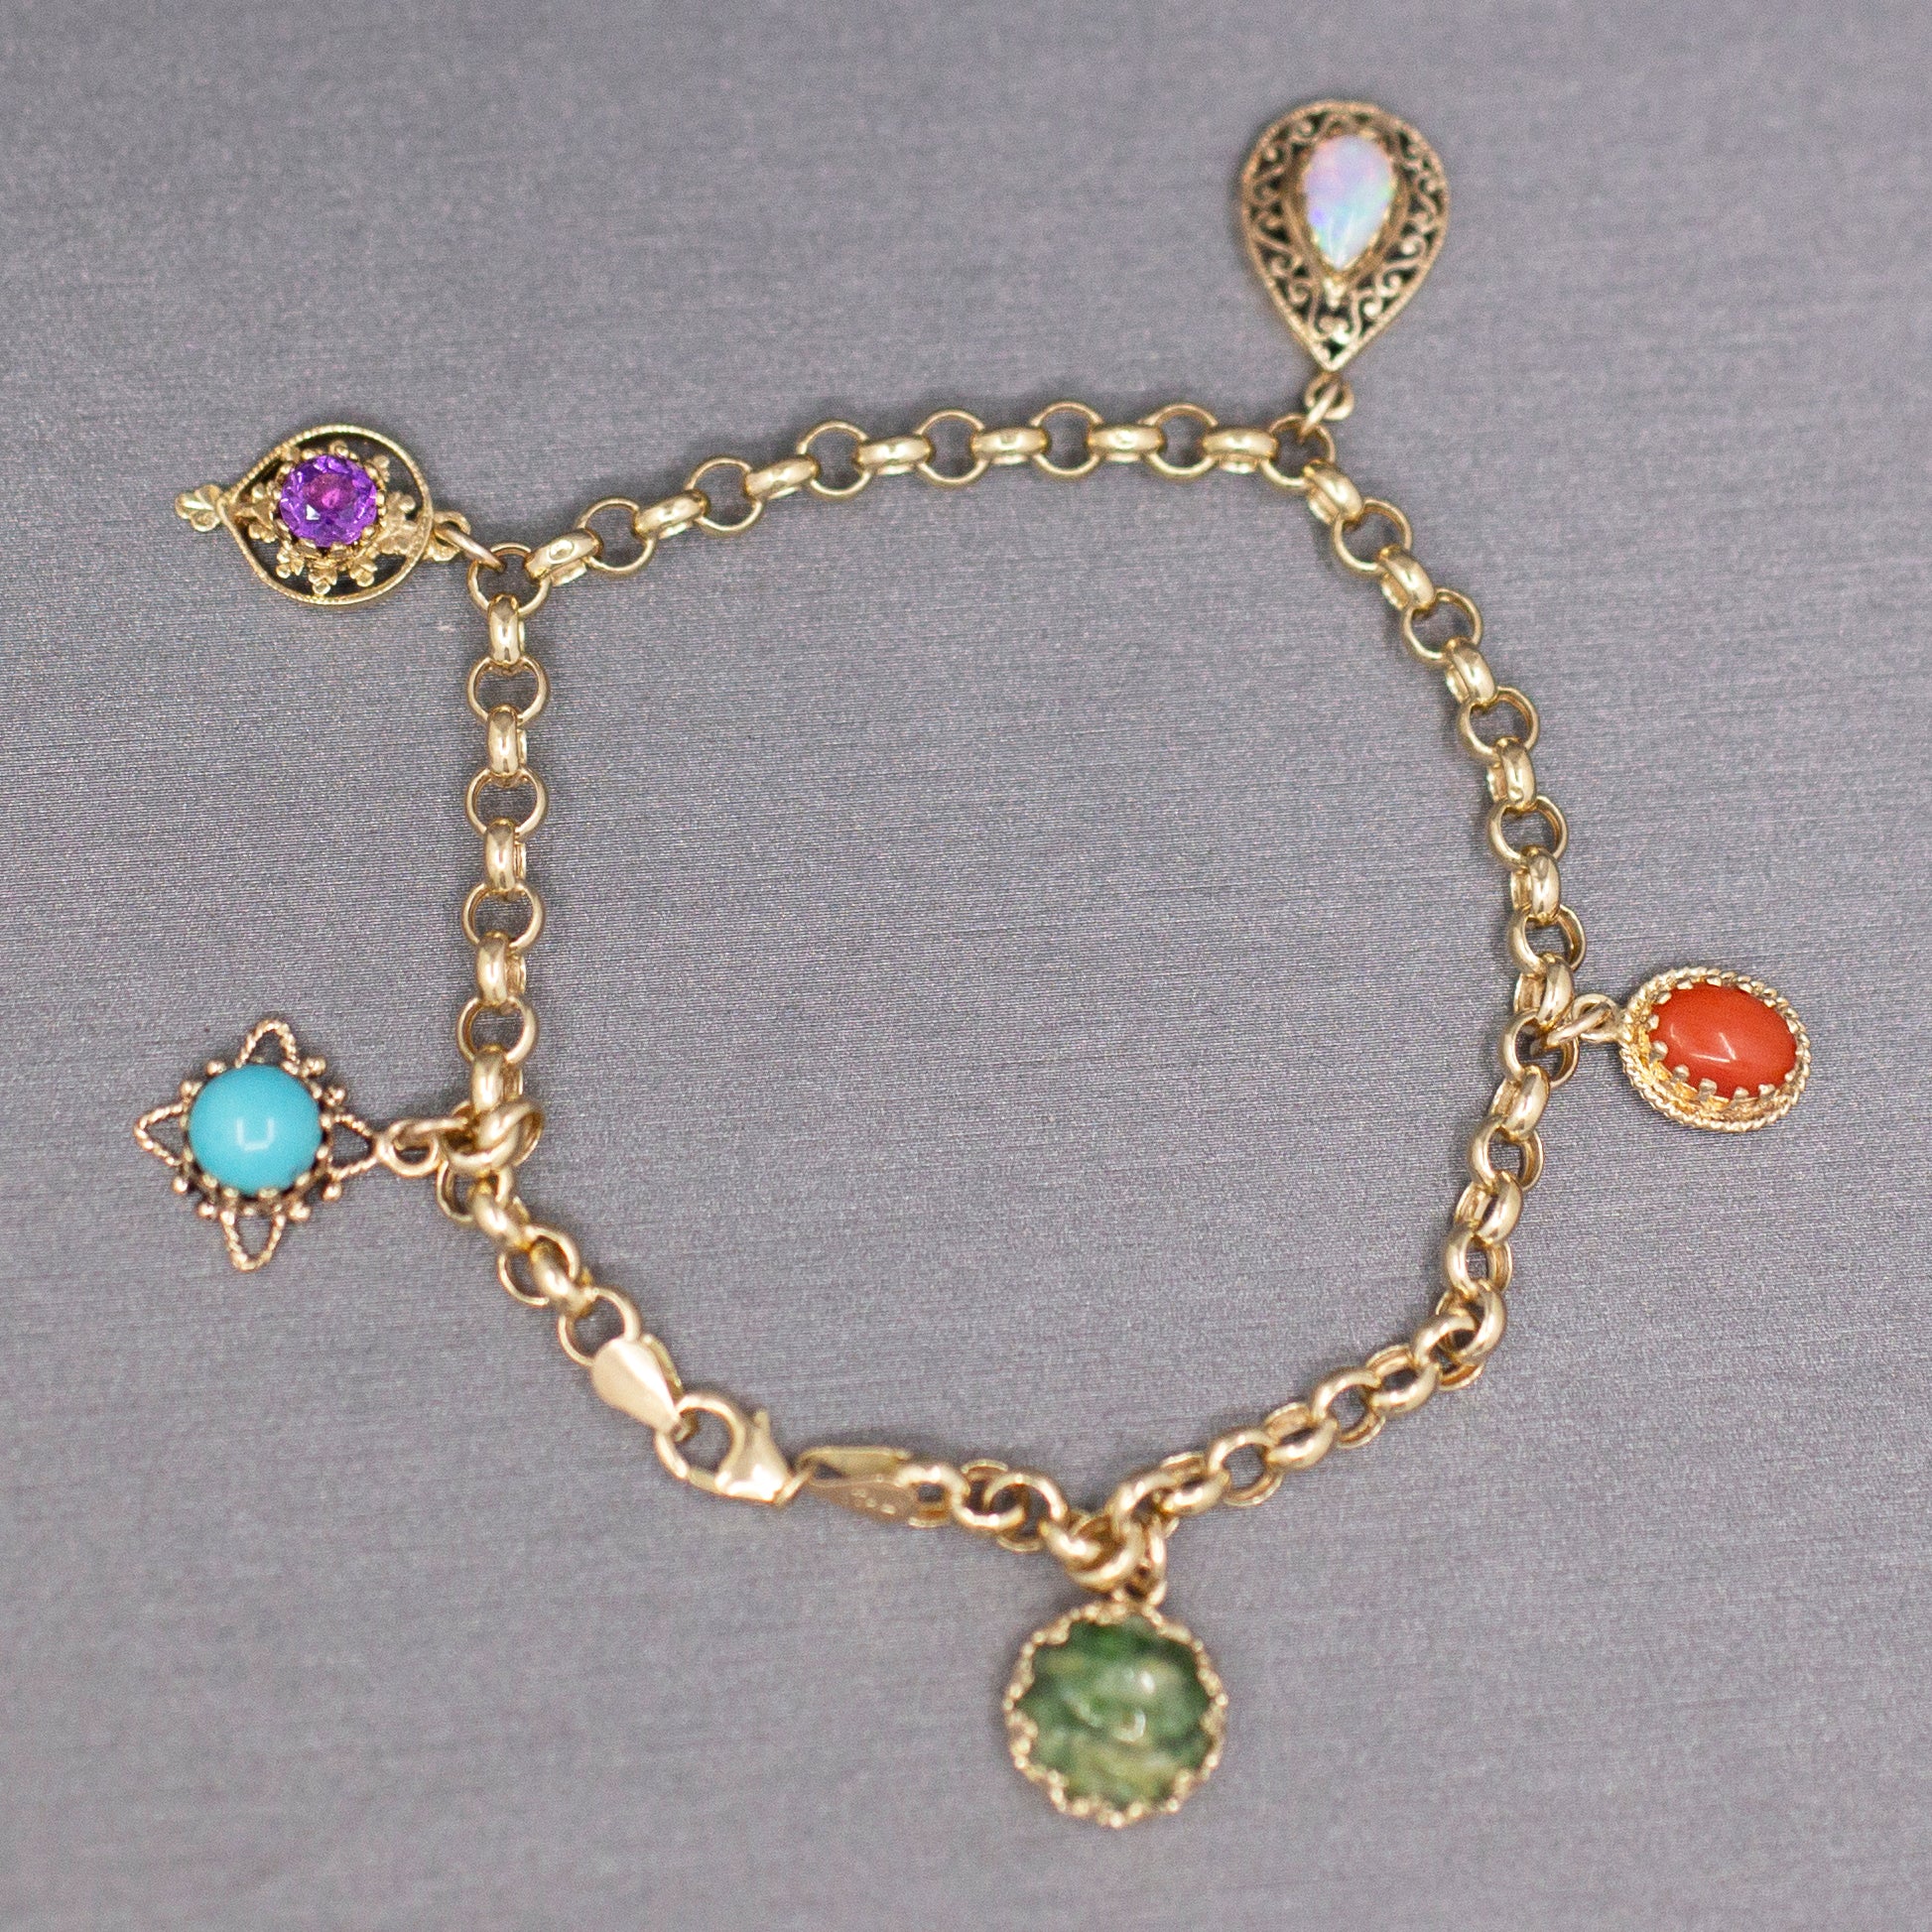 Multi-Gemstone Dangling Charm Bracelet on Rolo Chain in 14k Yellow Gold